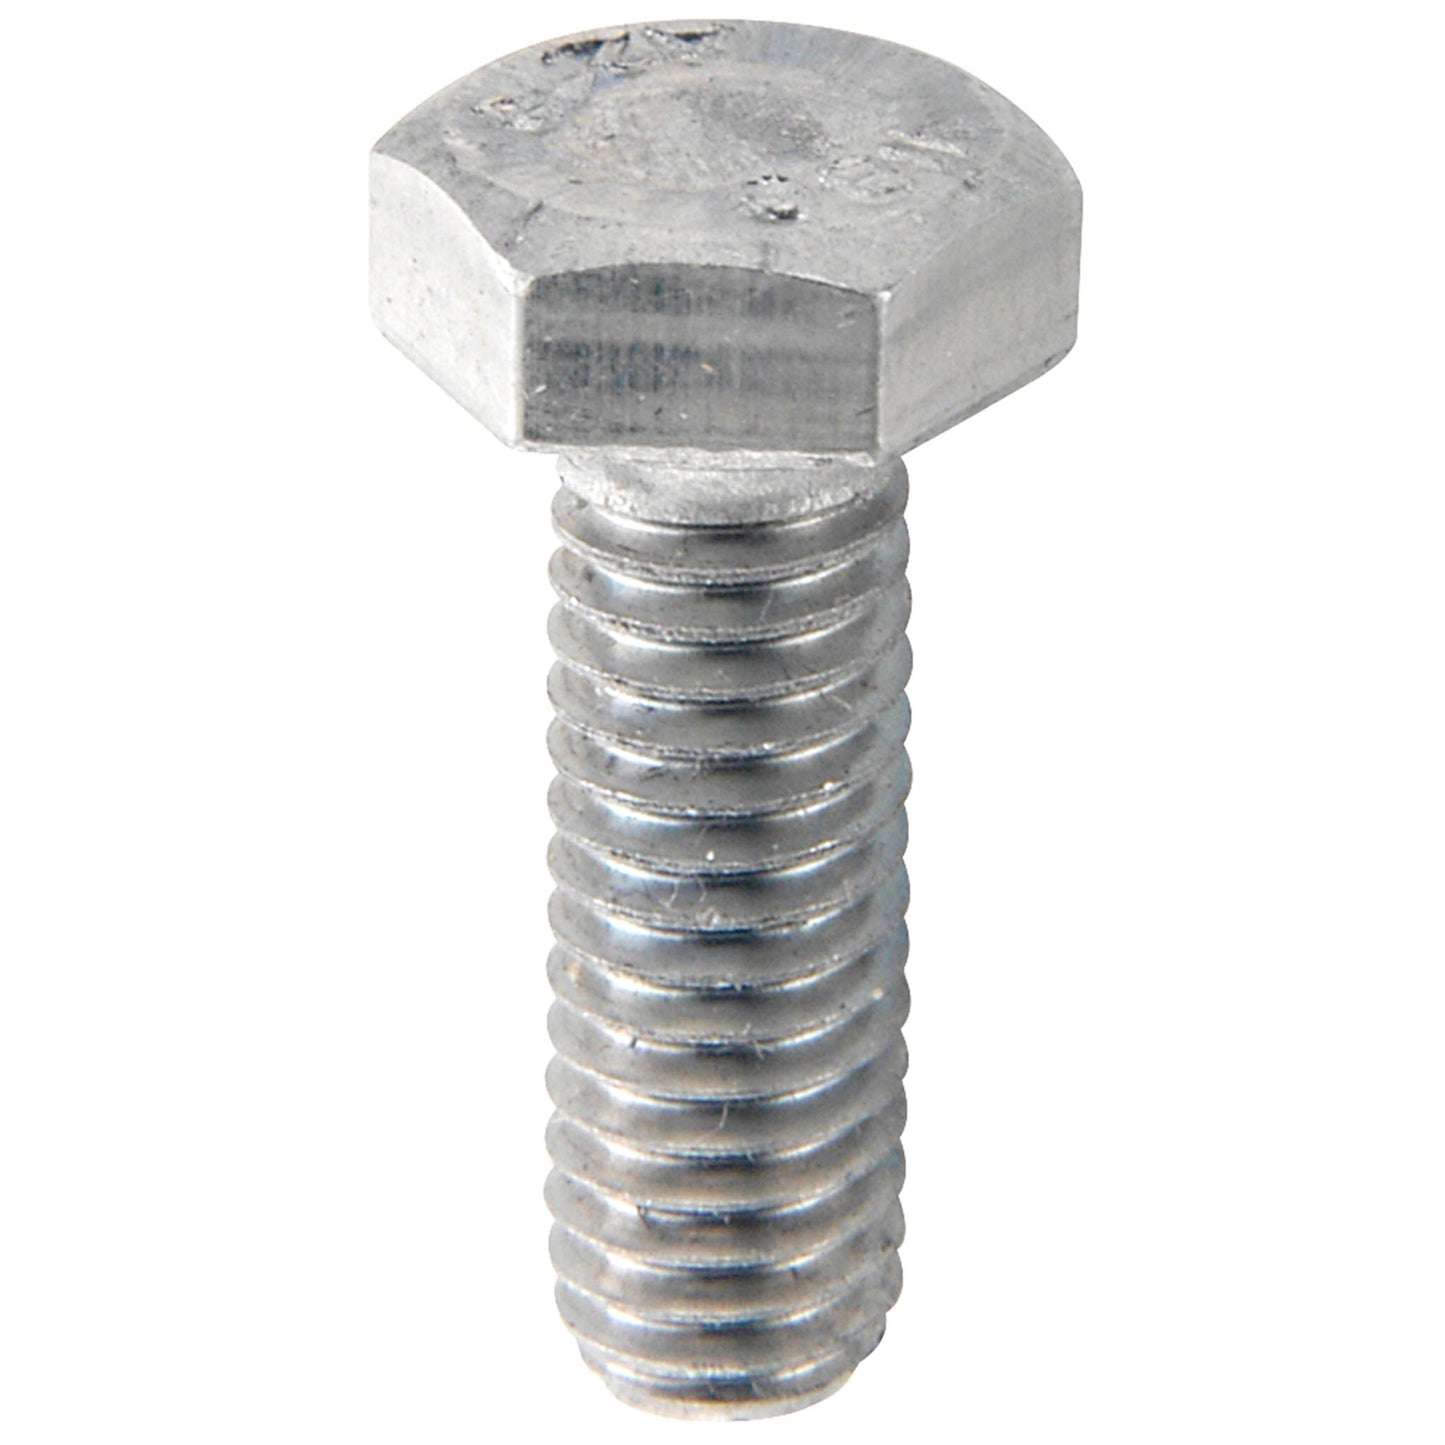 Mudguard screws M 6 x 16 stainless steel